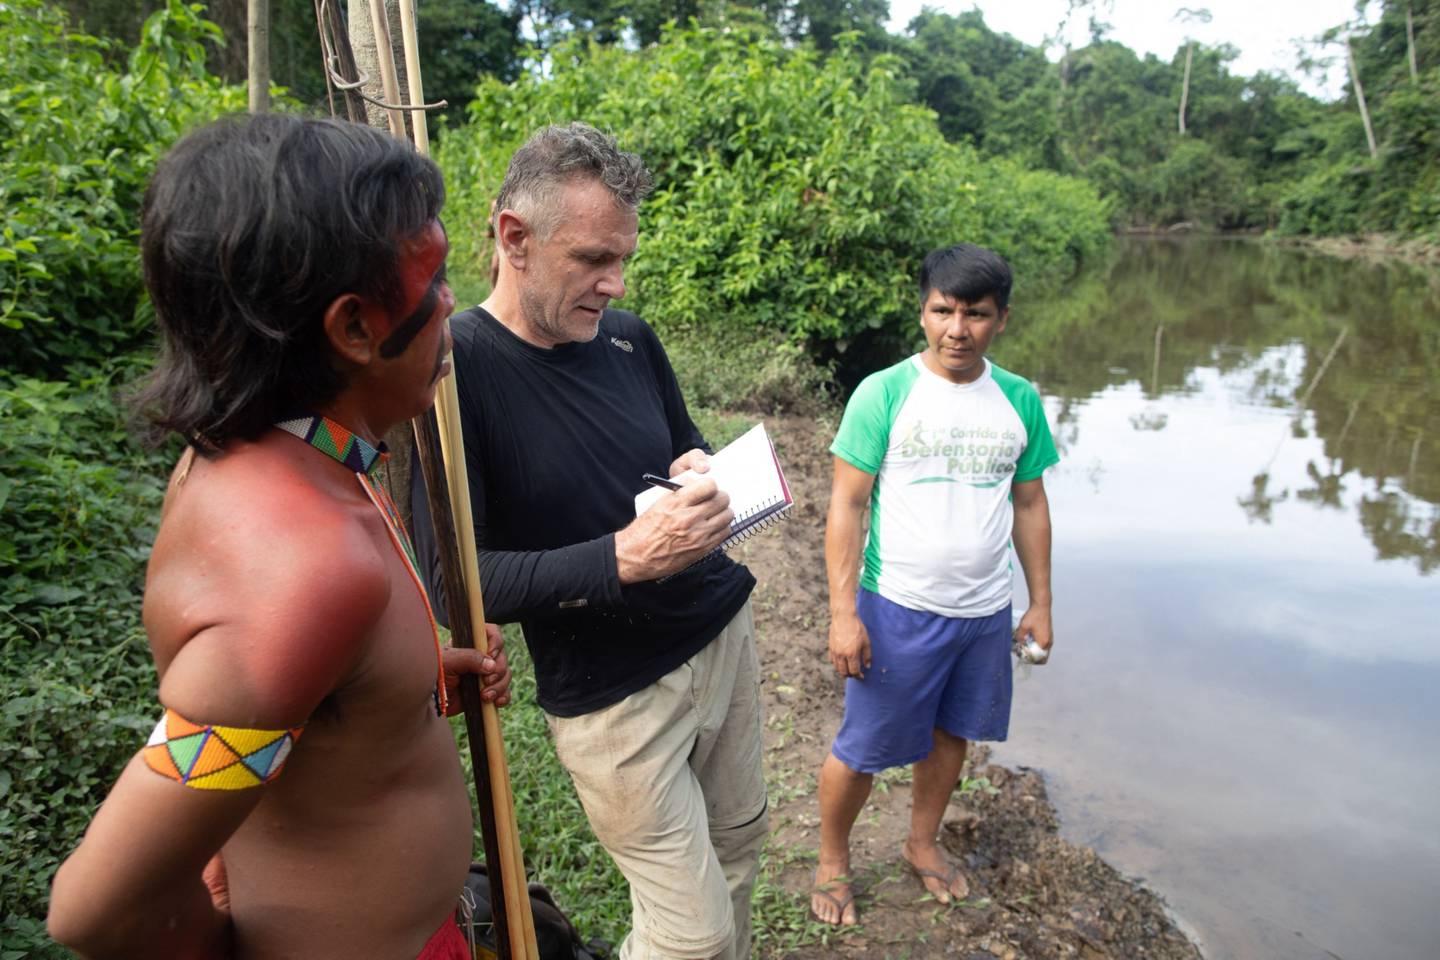 Foreign correspondent Dom Phillips (C) talks to two indigenous men in Aldeia Maloca Papiú, Roraima State.